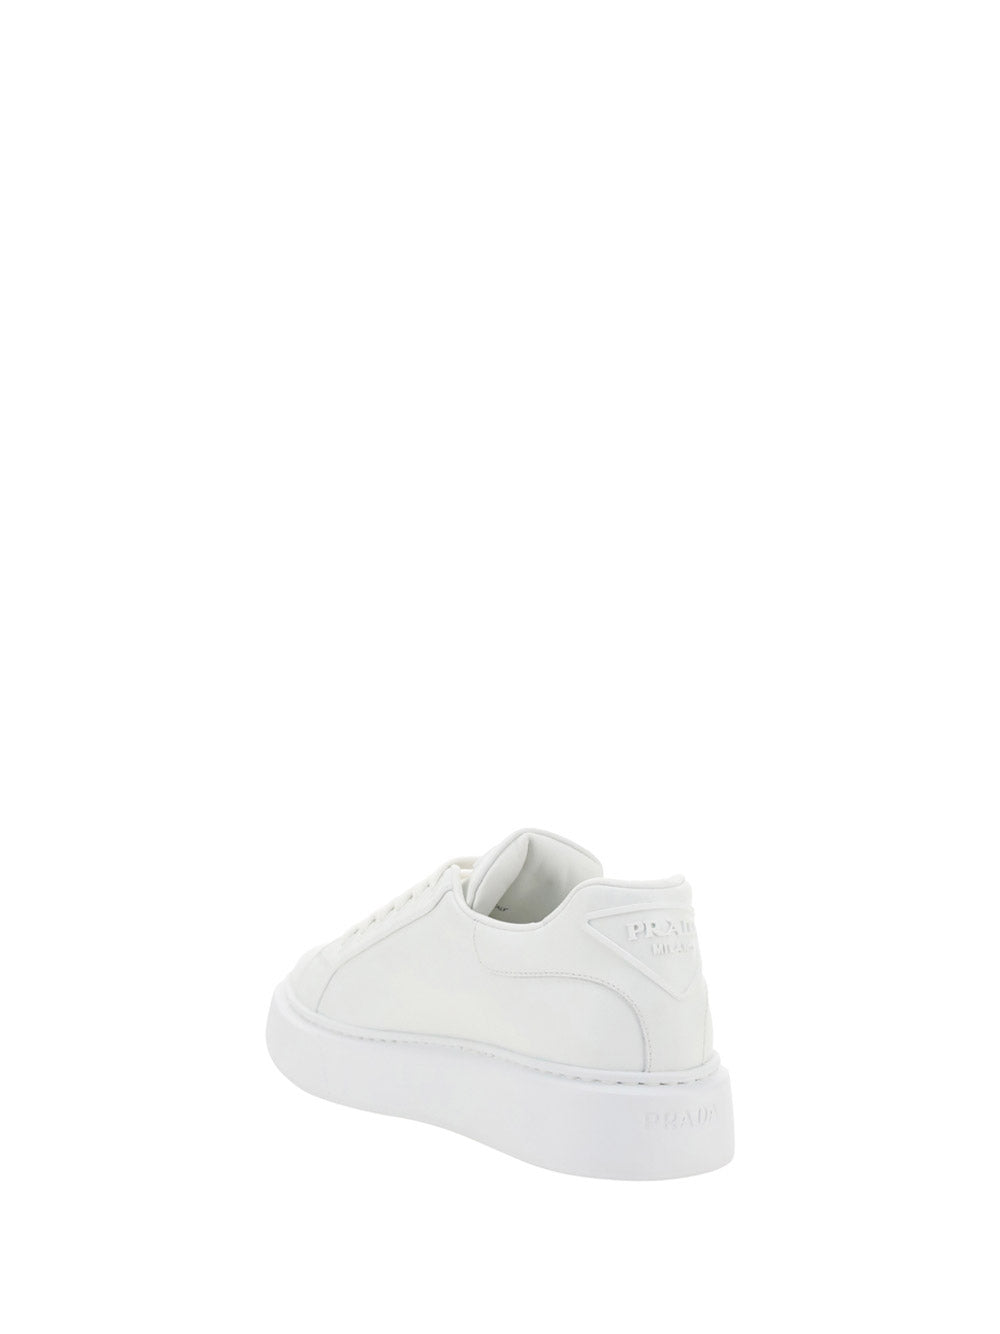 Prada Macro Leather Sneakers - White